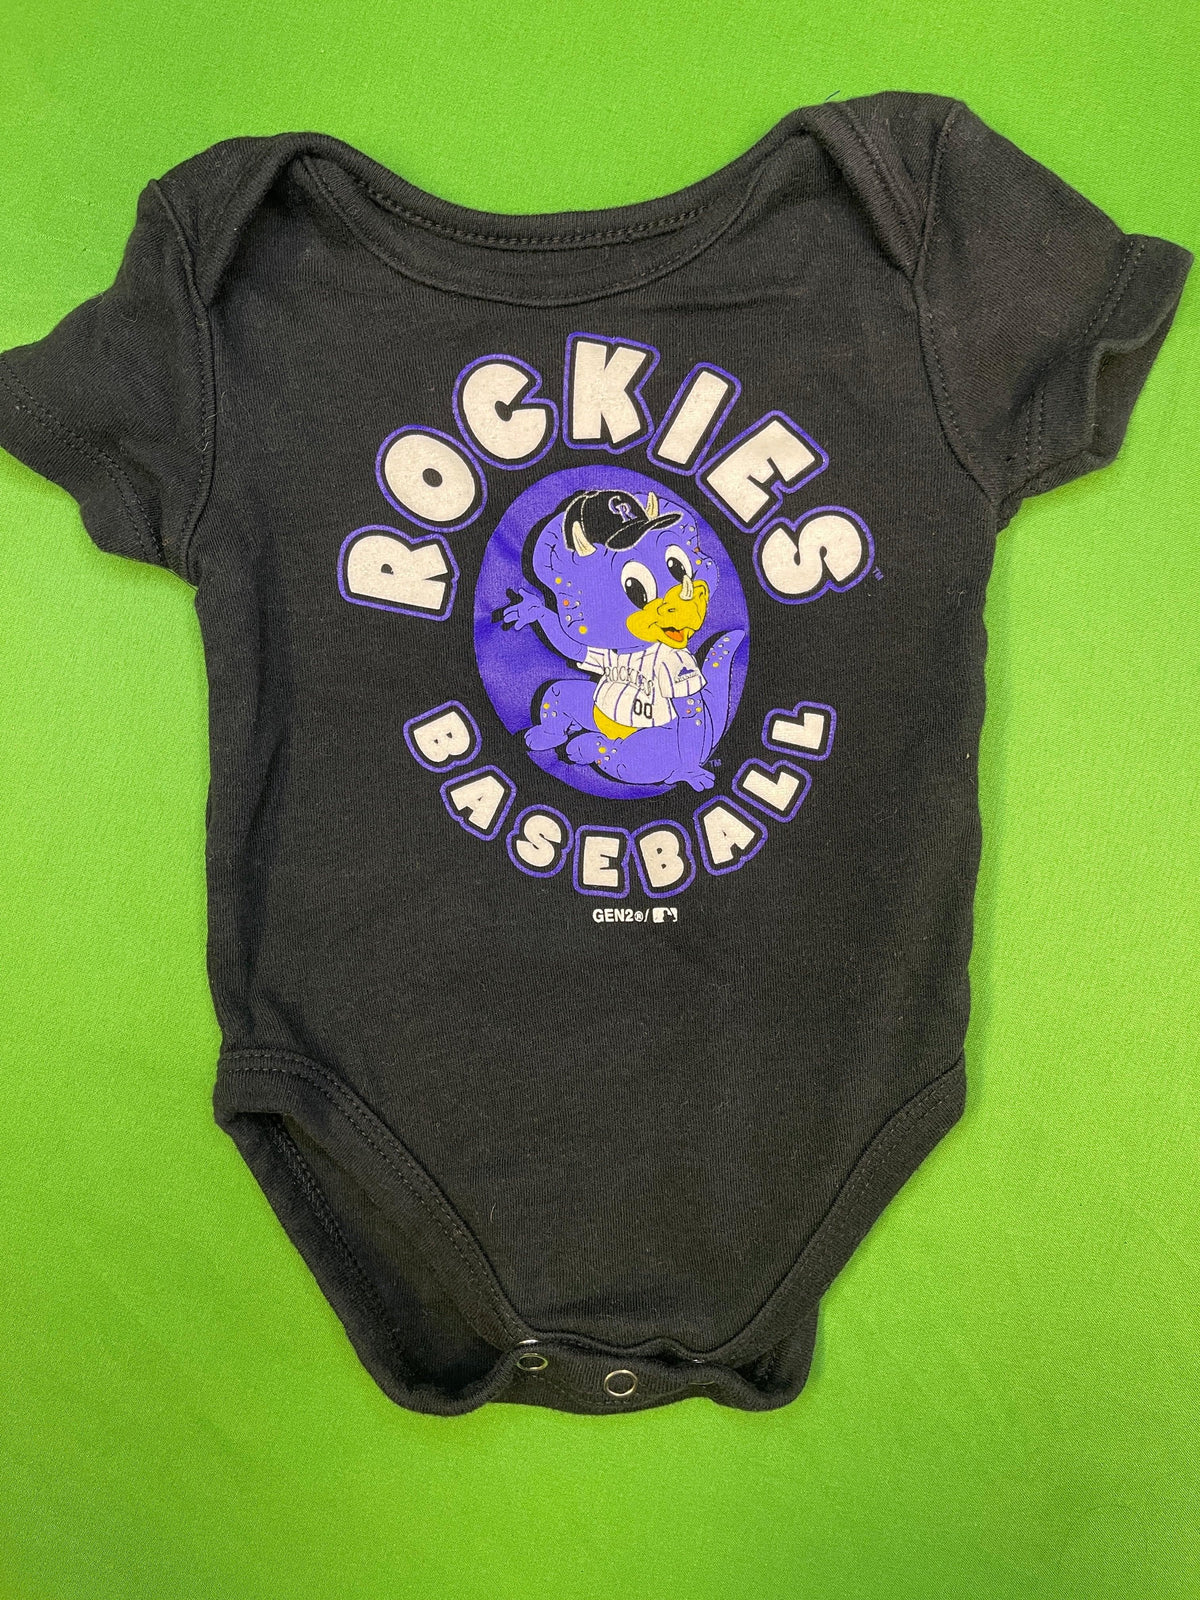 MLB Colorado Rockies Gen2 Infant Bodysuit/Vest Newborn 0-3 months